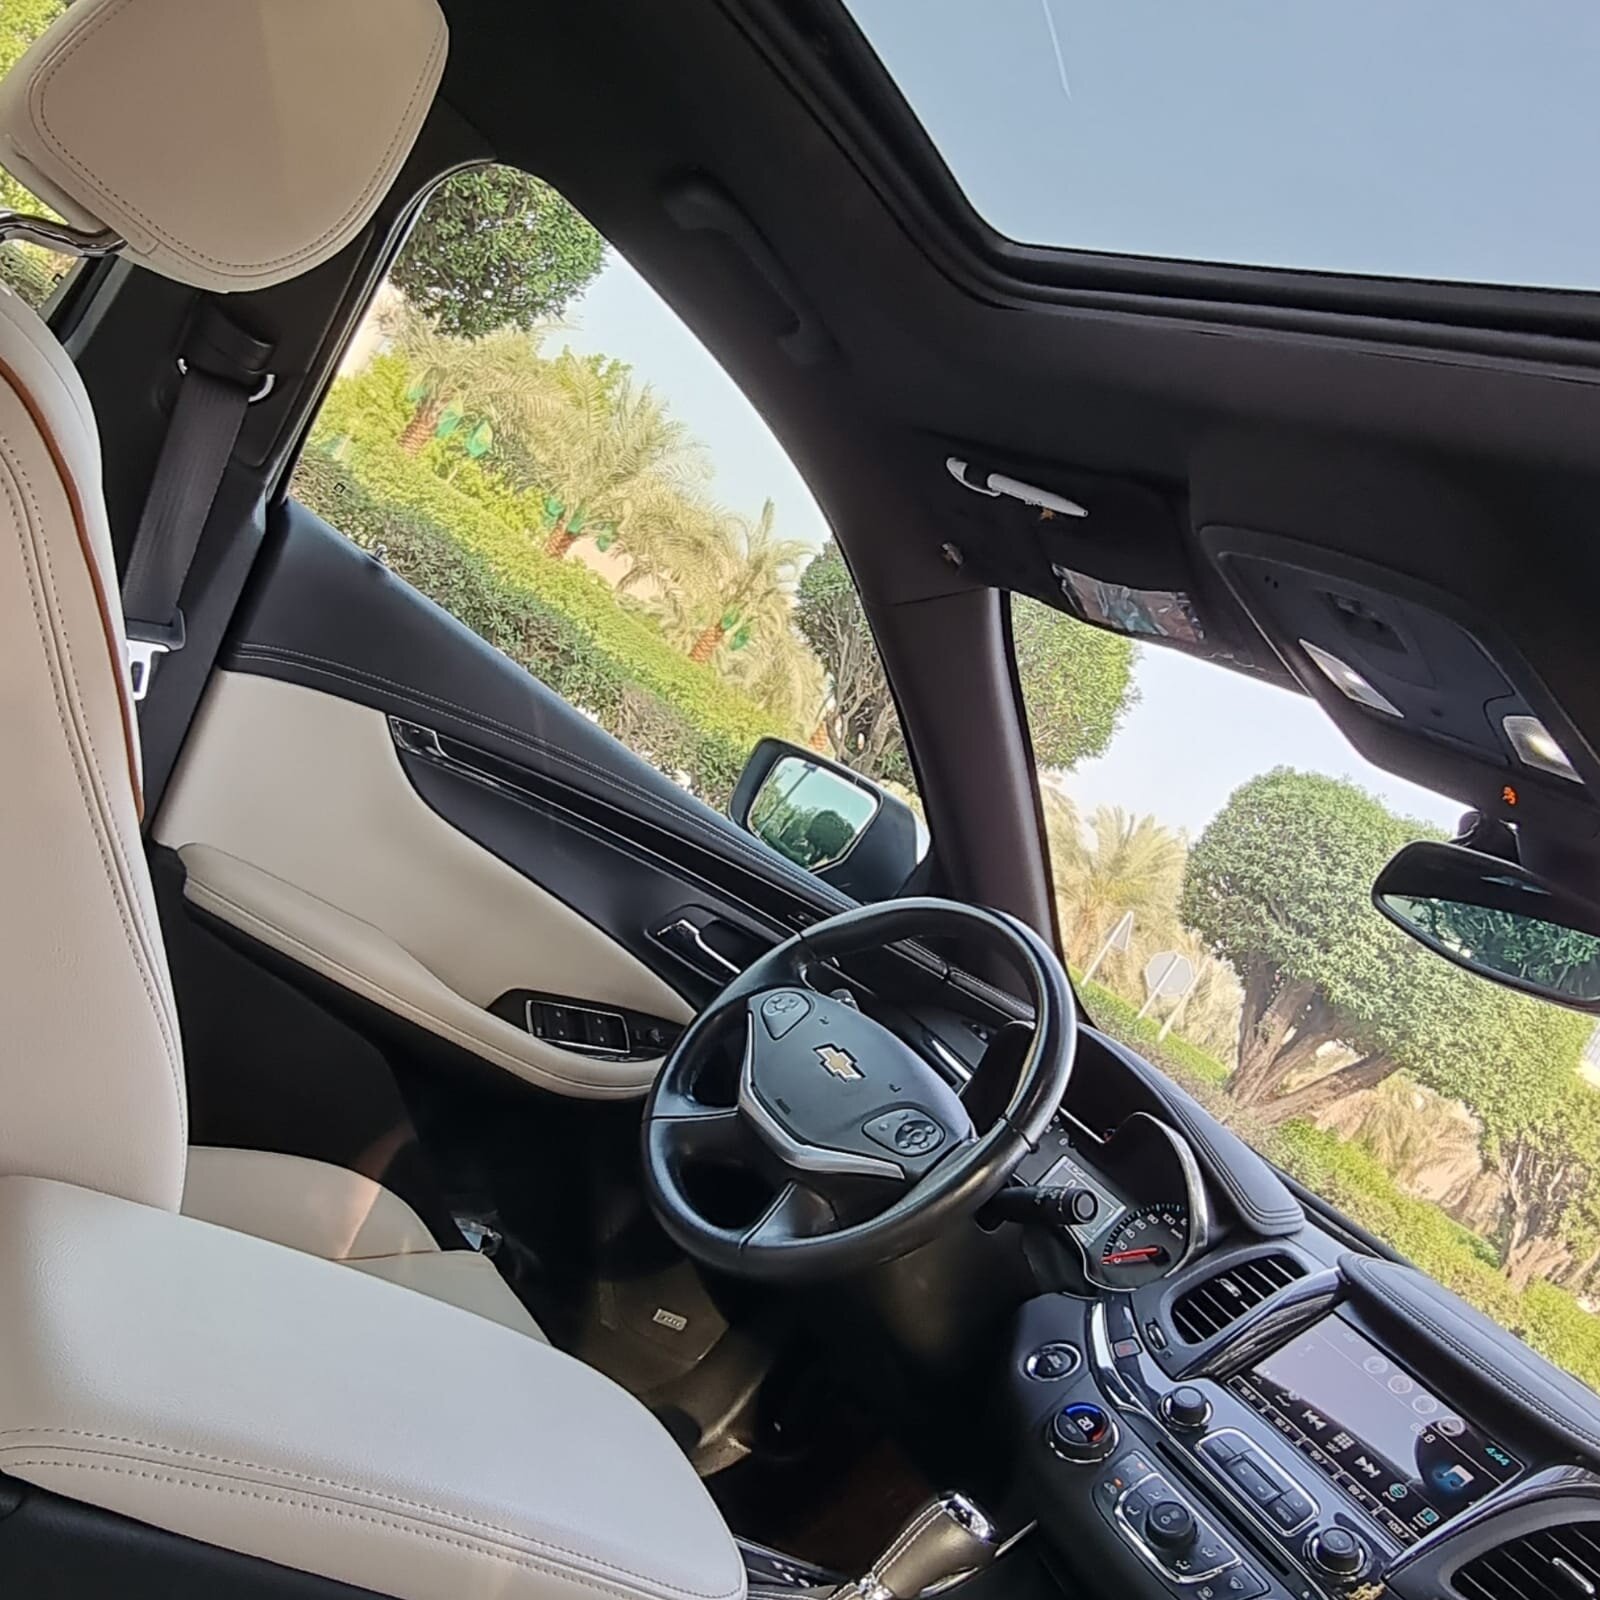 Chevrolet impala 2019 شفروليه امبالا ٢٠١٩4.jpeg